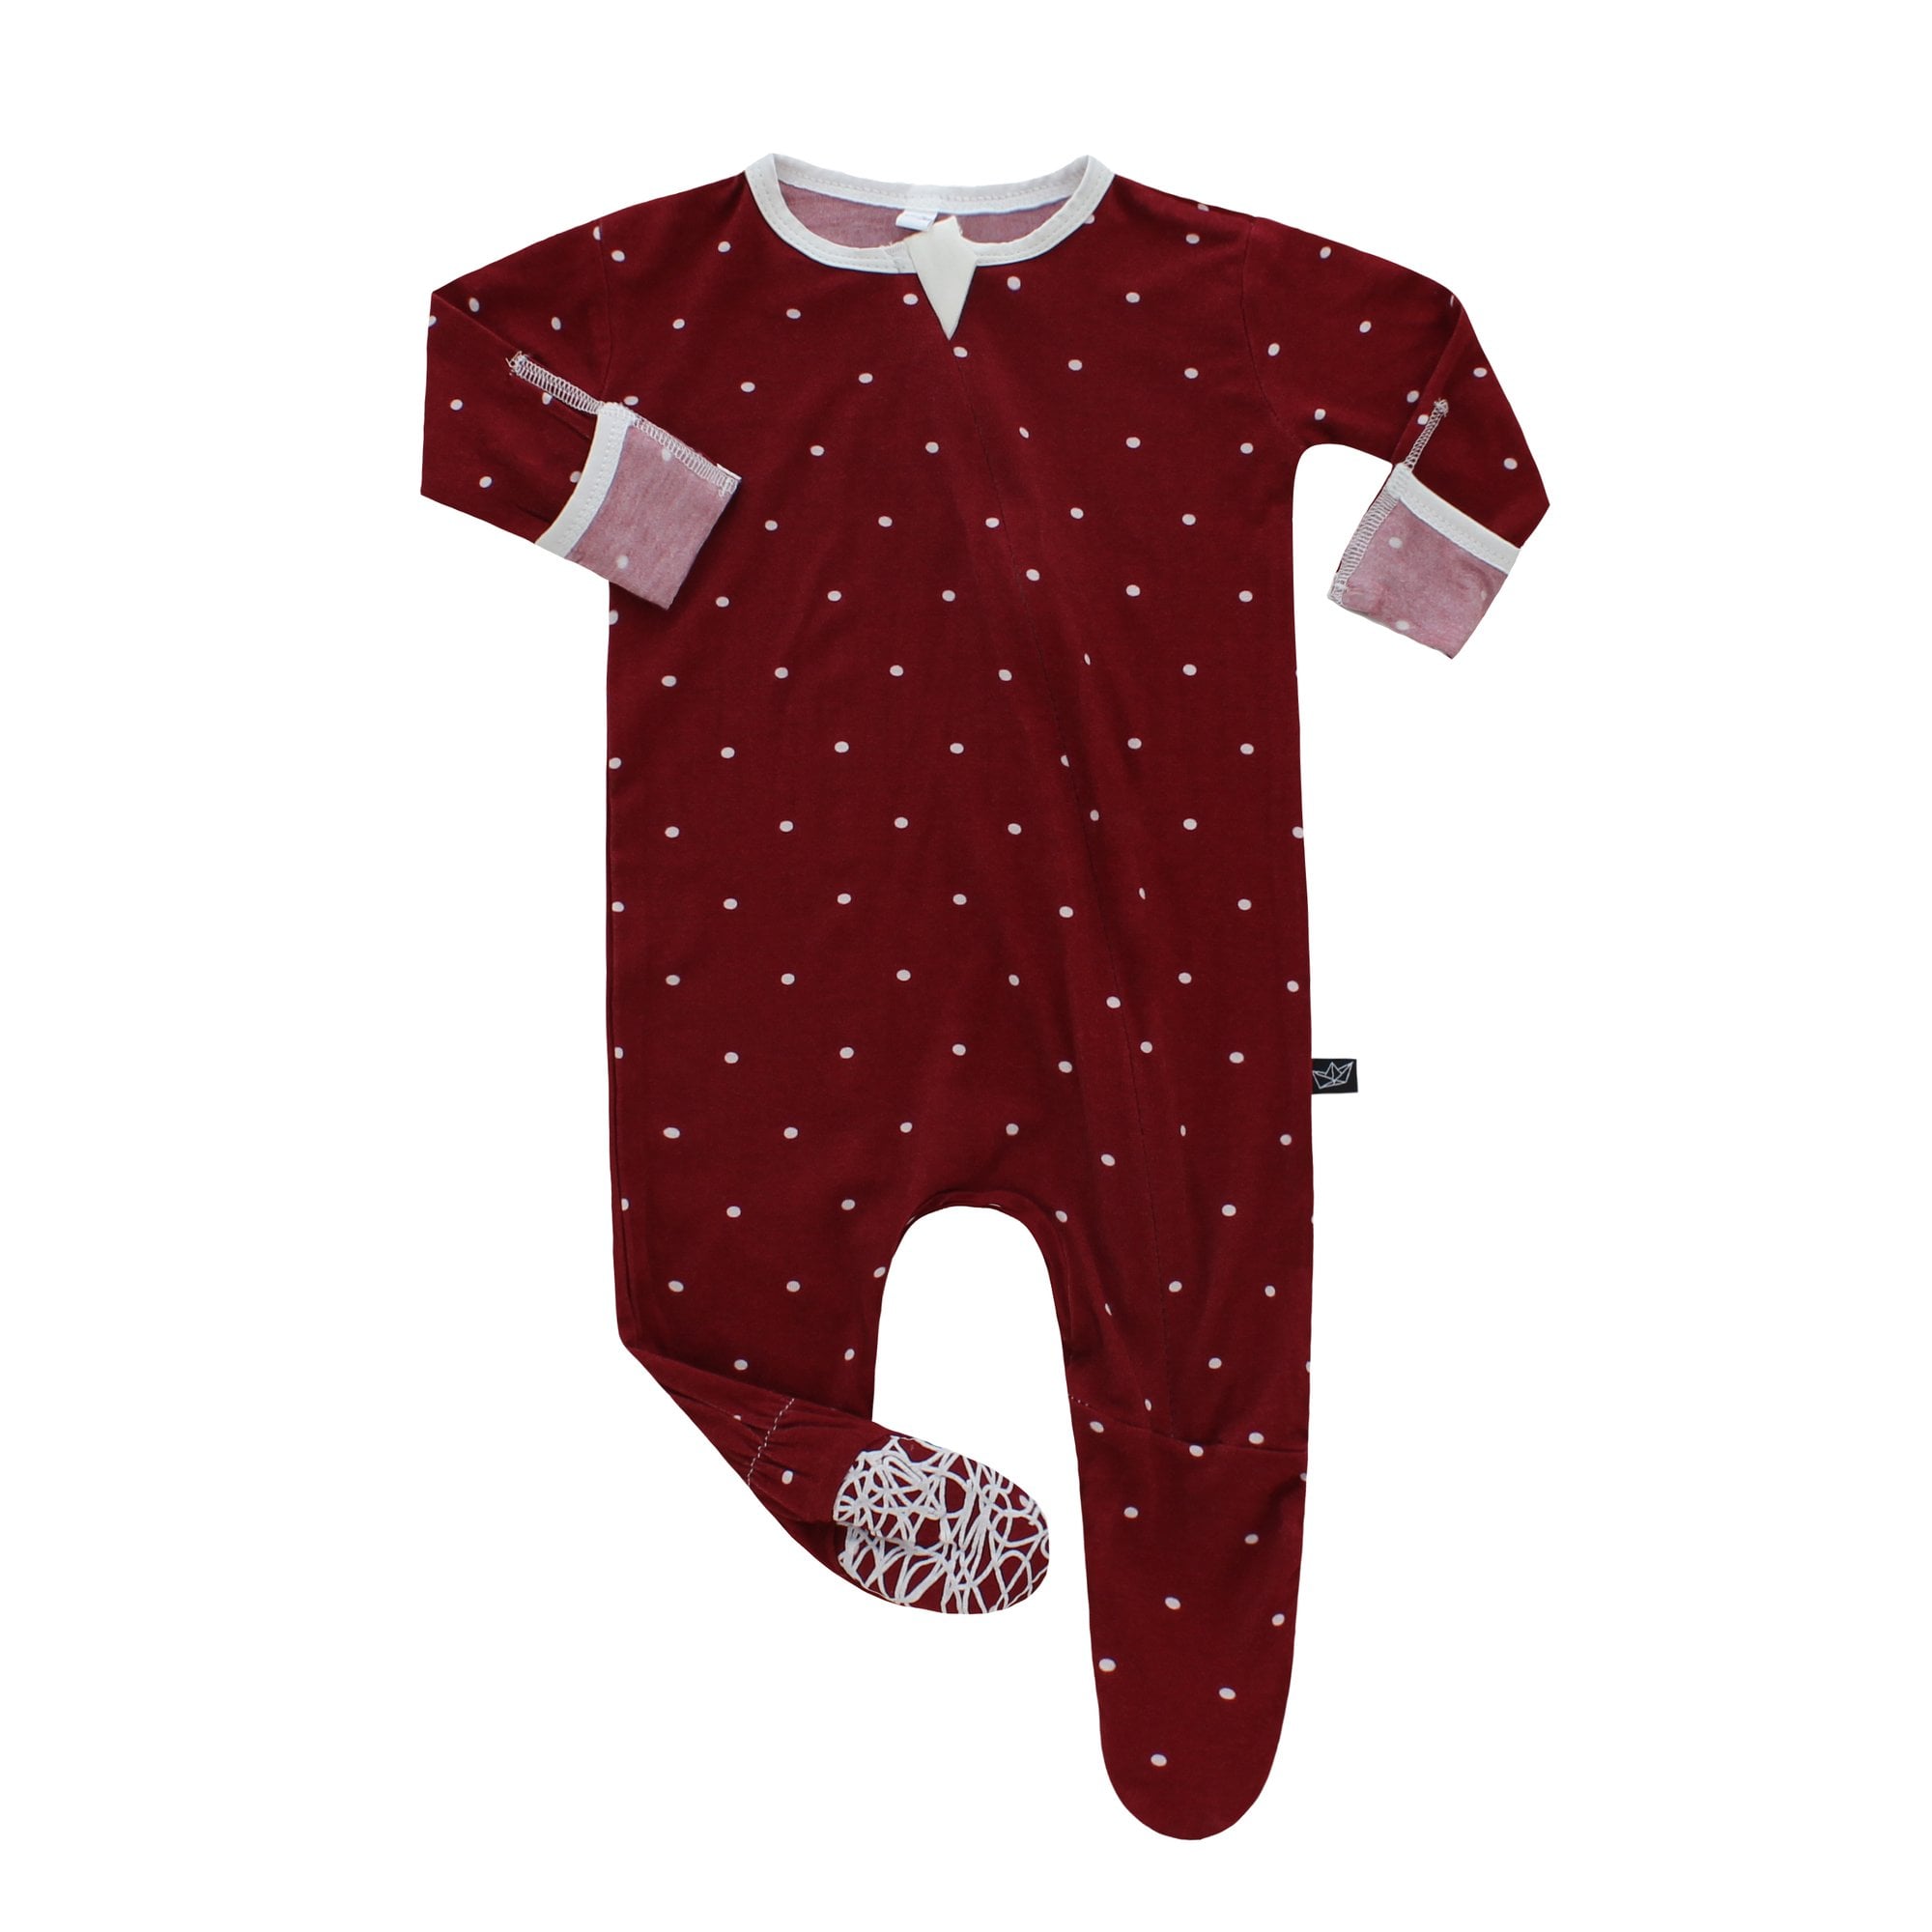 Most Stylish Baby Clothing Brands | POPSUGAR Fashion